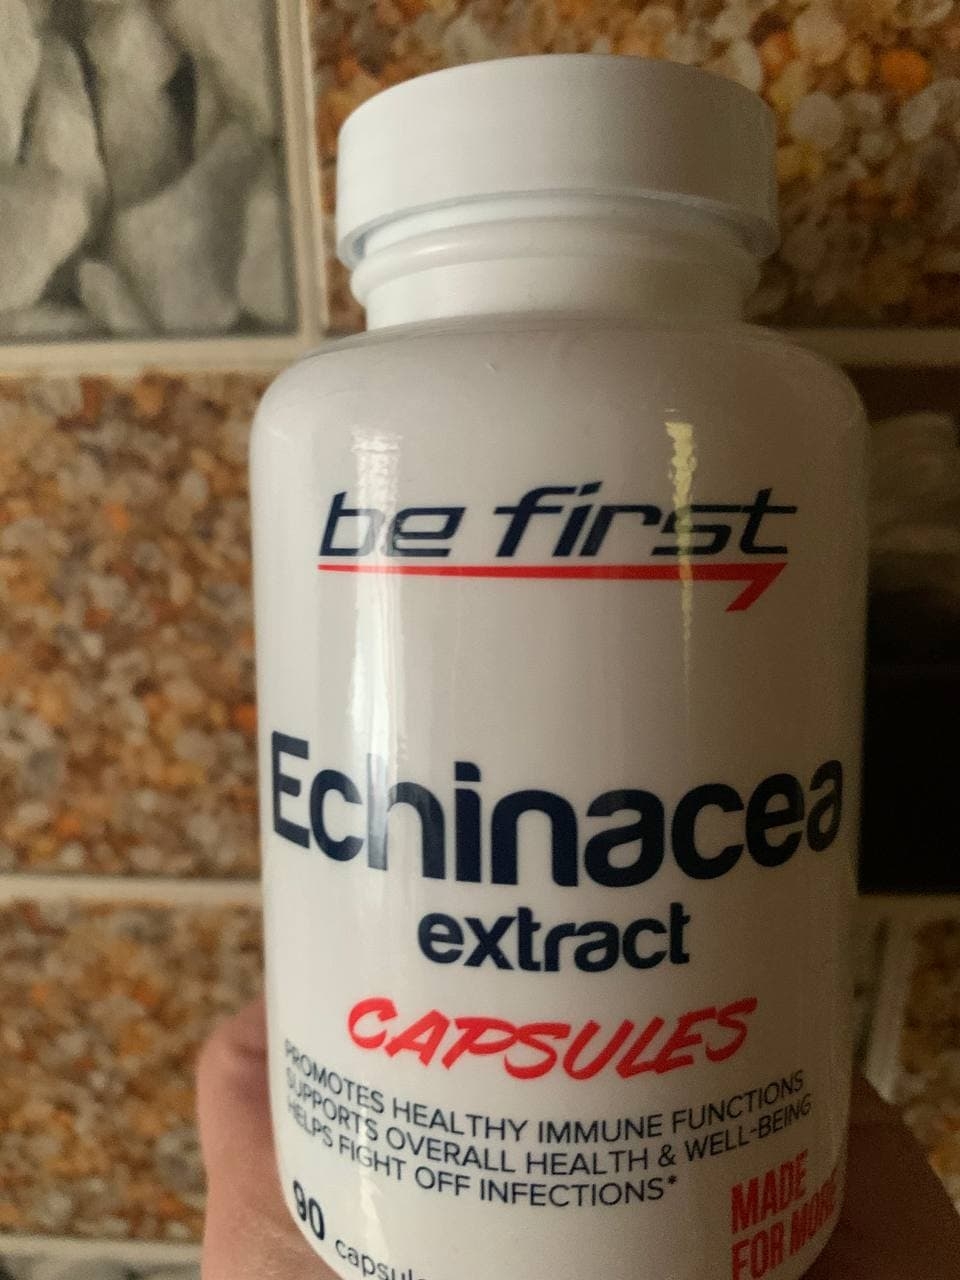 Be First Echinacea extract capsules, 90 капсул - Никому не помешает